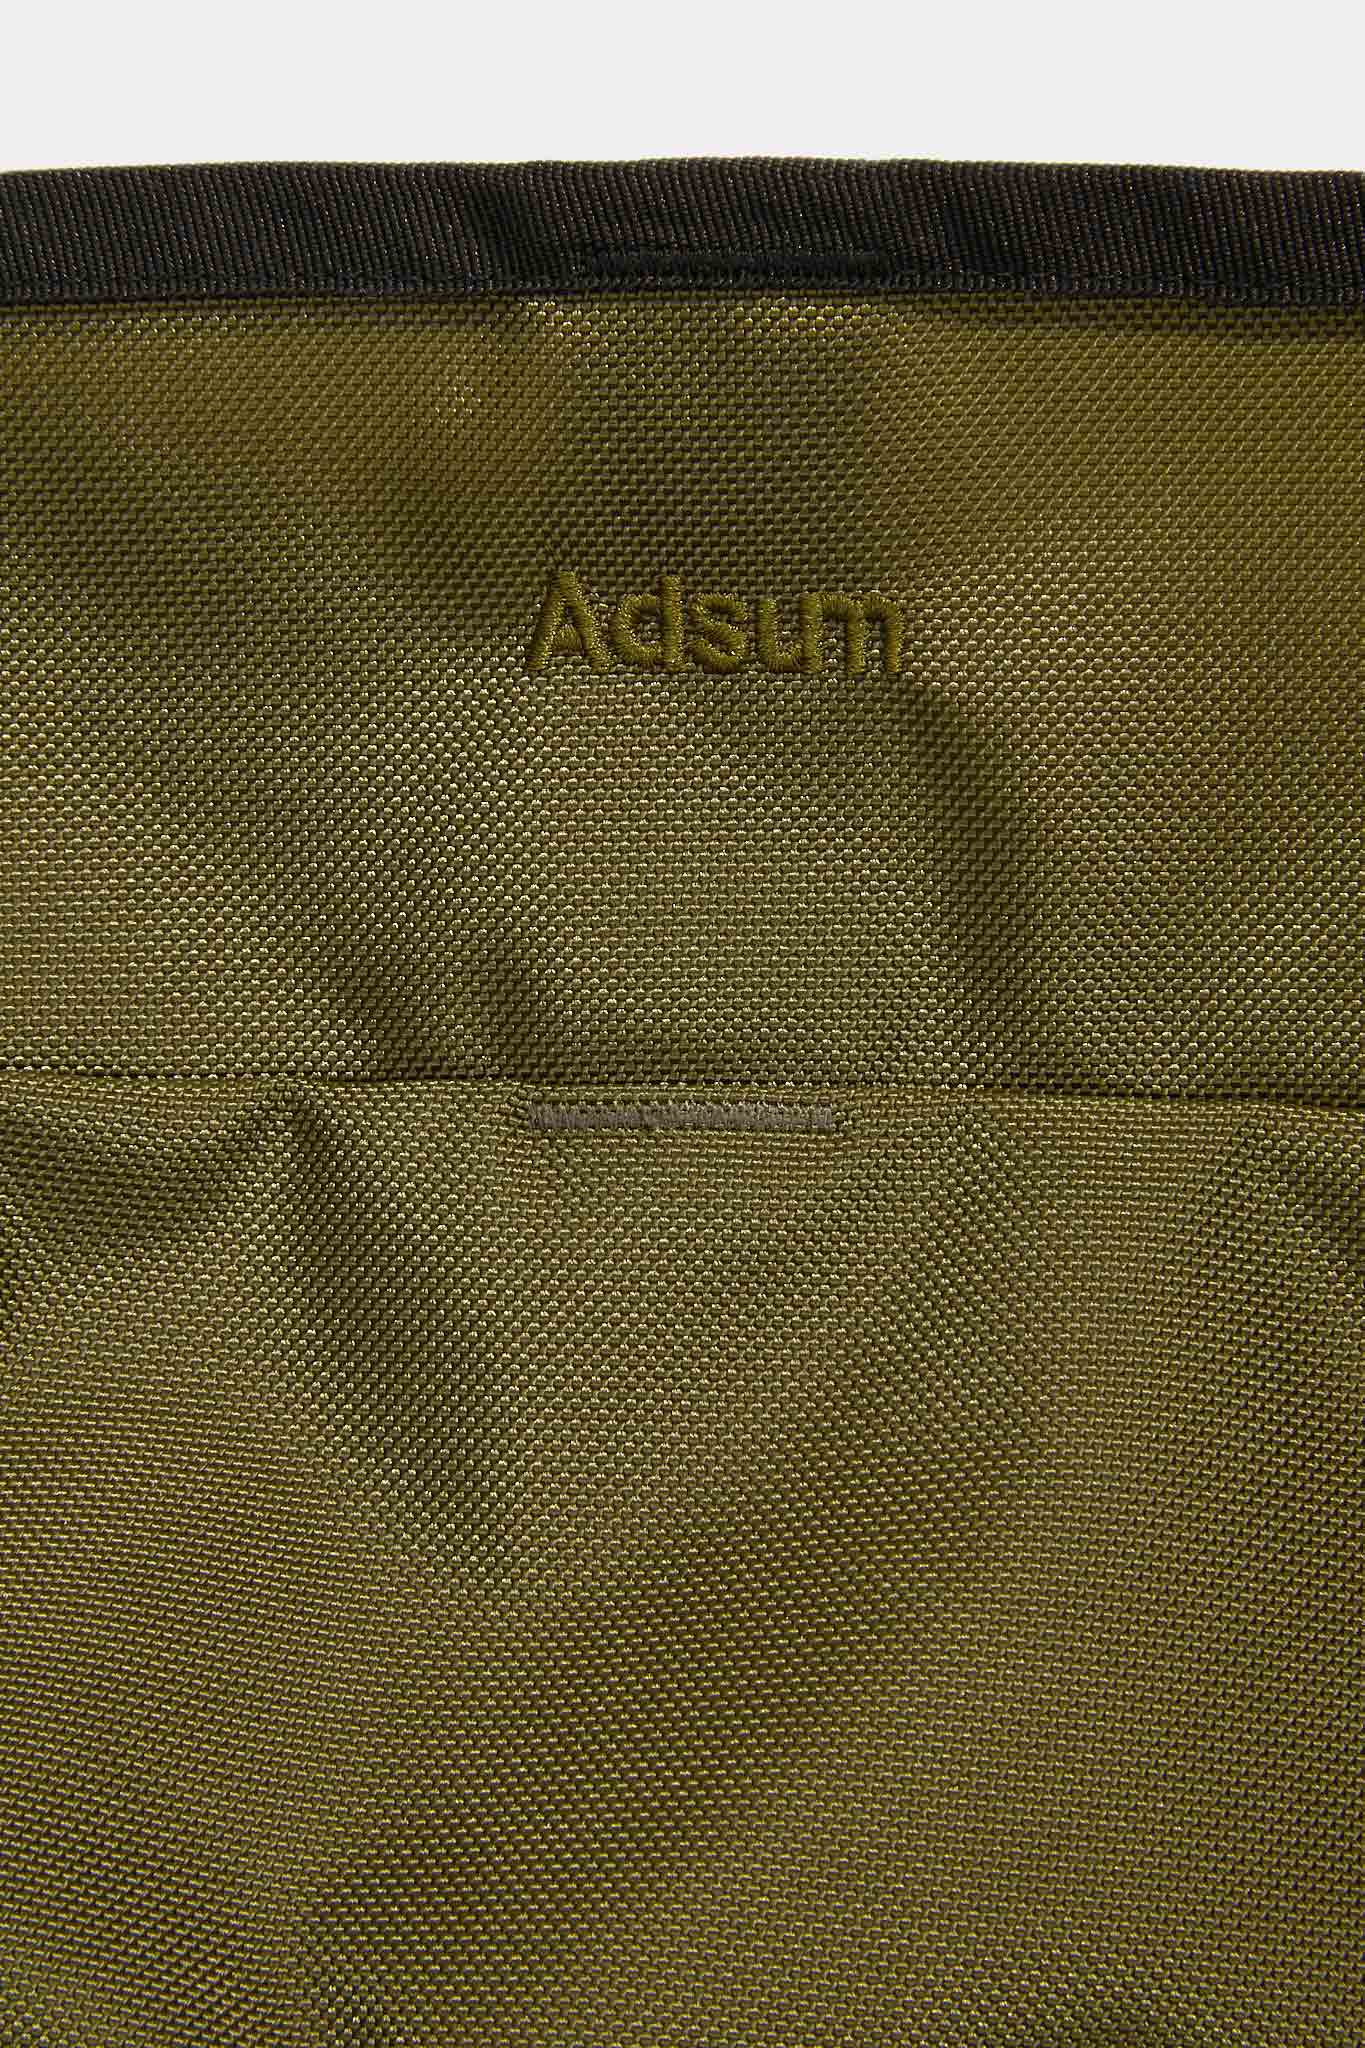 Zip Tote - Green / Adsum